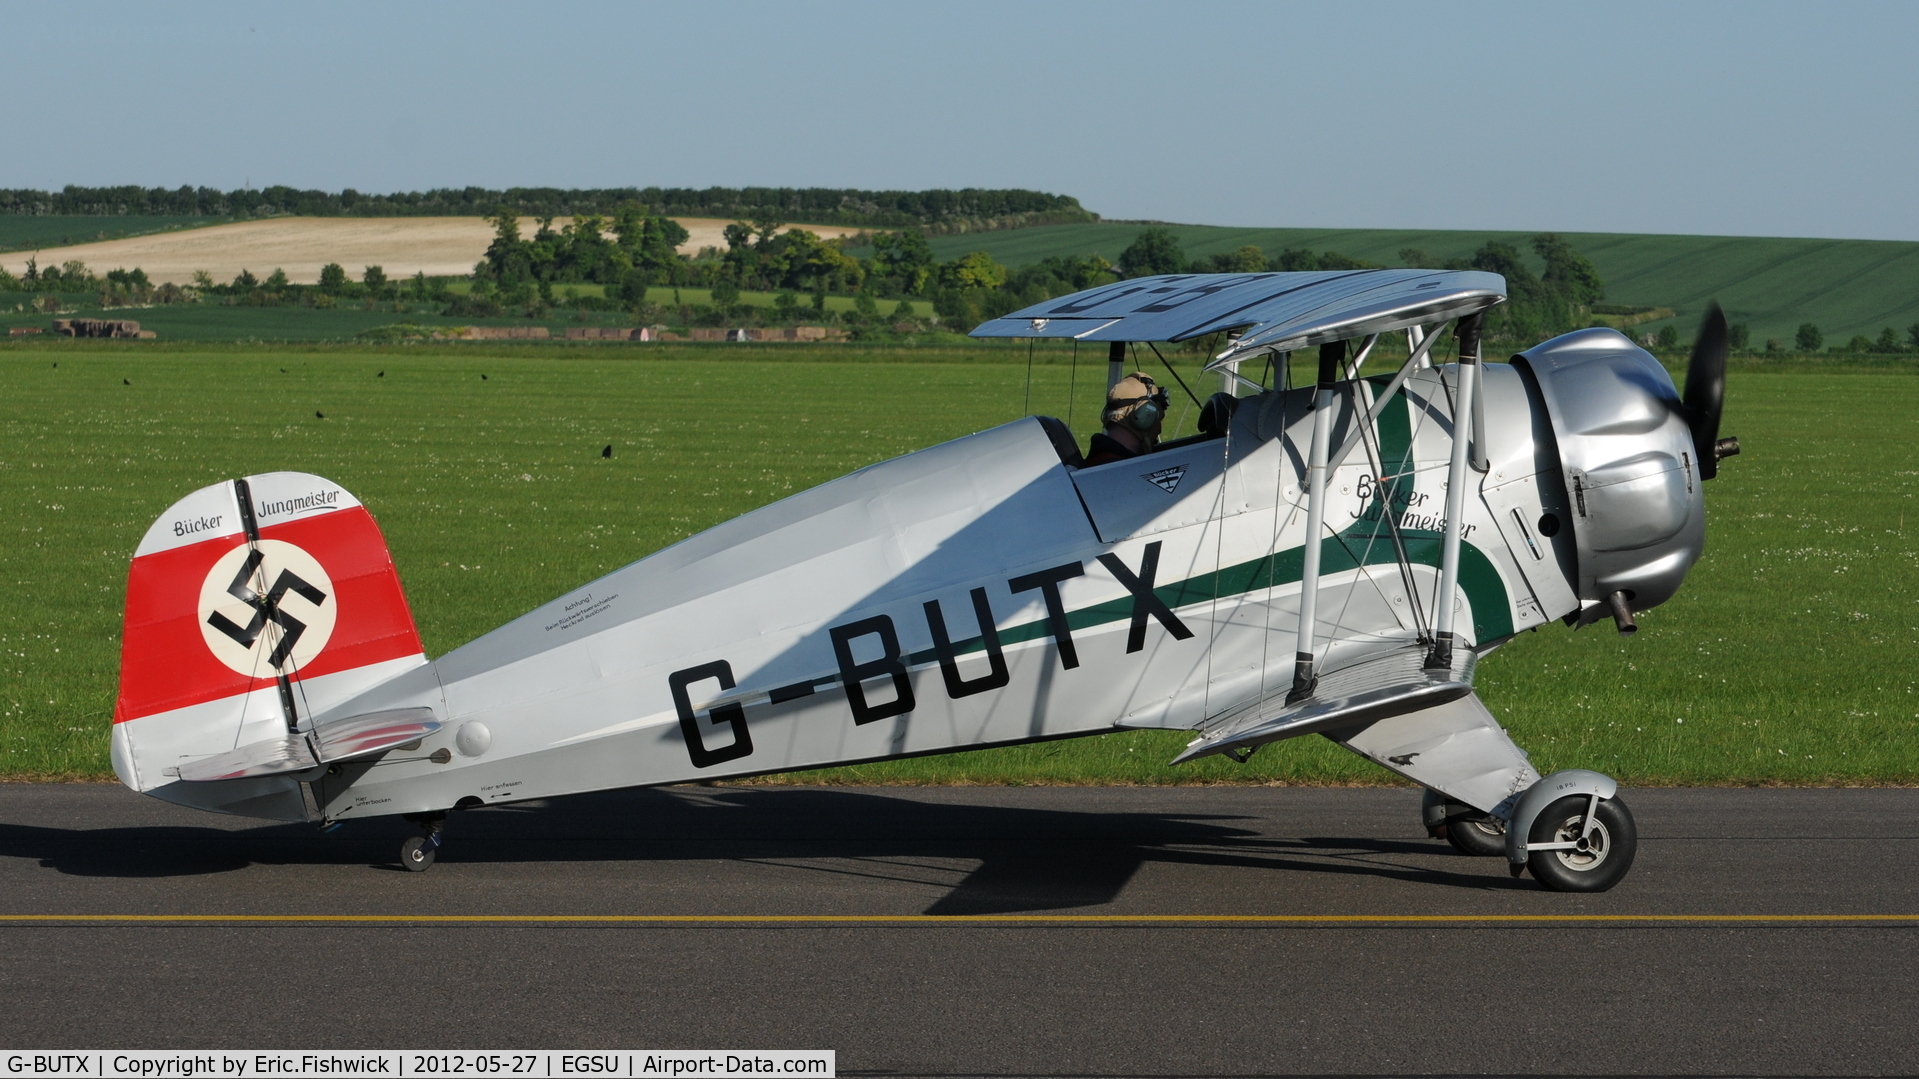 G-BUTX, 1940 Bucker Bu-133C Jungmeister C/N ES.1-4, 2. G-BUTX at IWM Duxford Jubilee Airshow, May 2012.